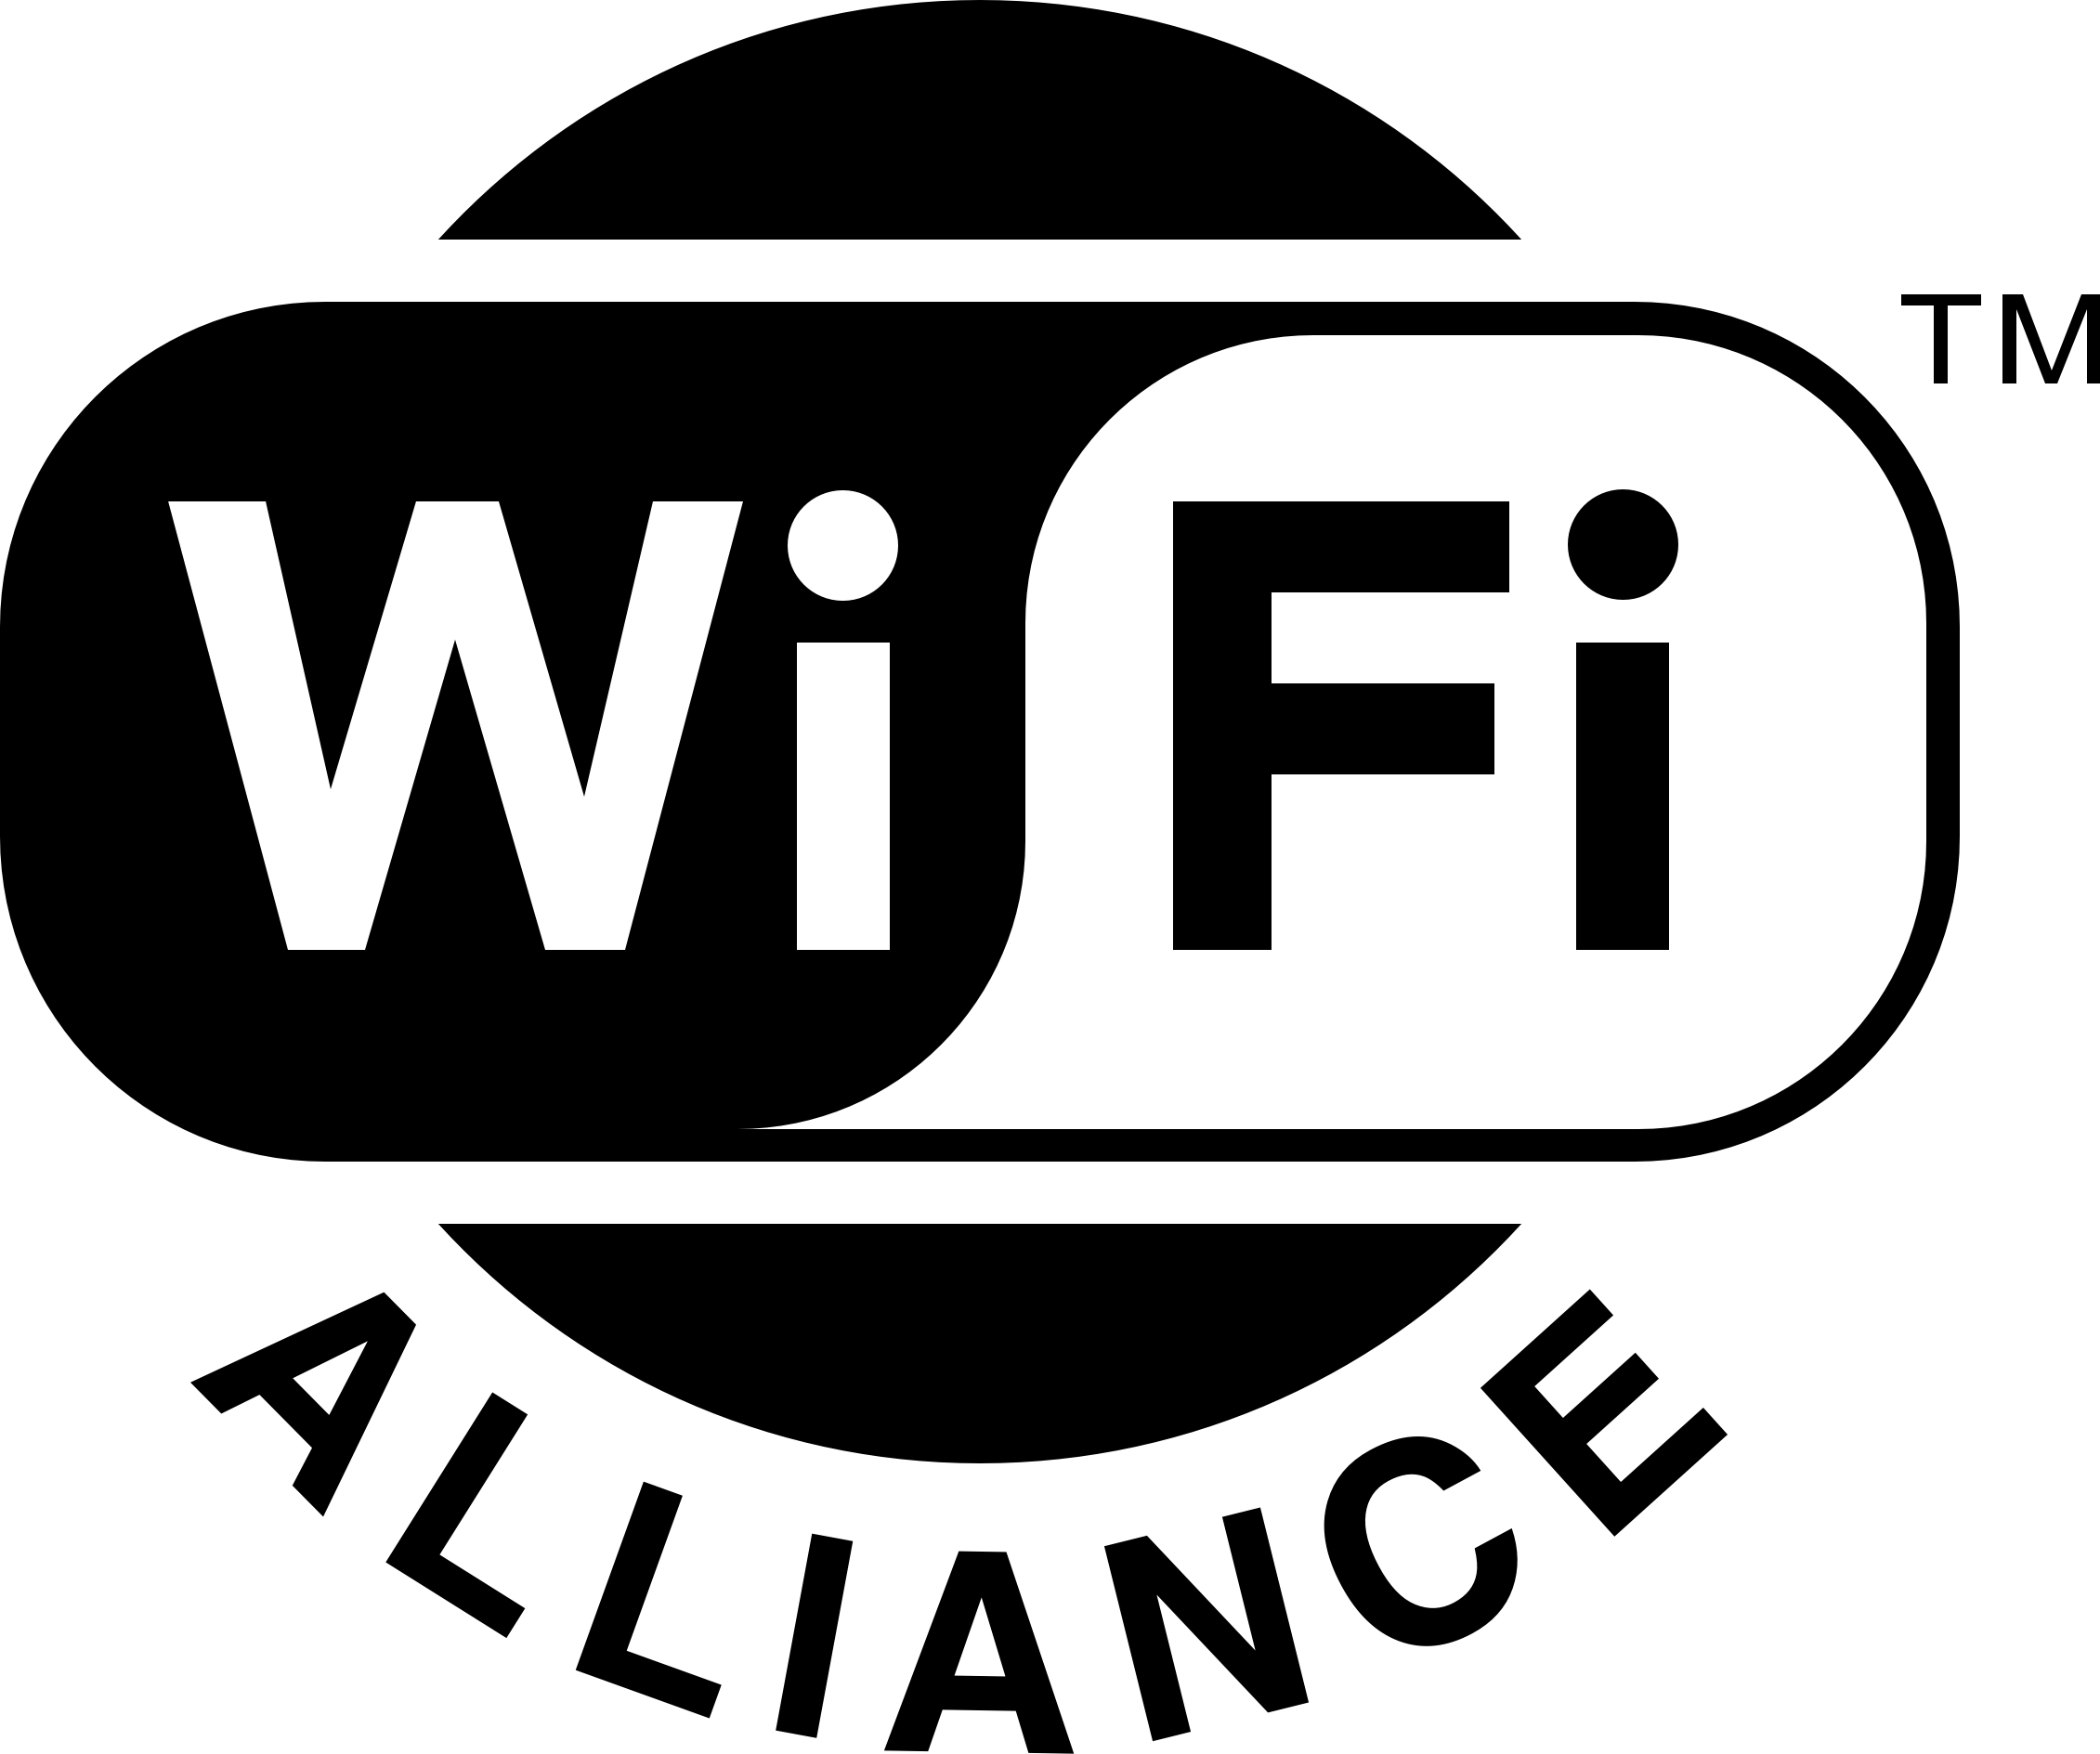 Wi-Fi Alliance - WECA - Wireless Ethernet Compatibility Alliance - Альянс совместимости беспроводного оборудования Ethernet